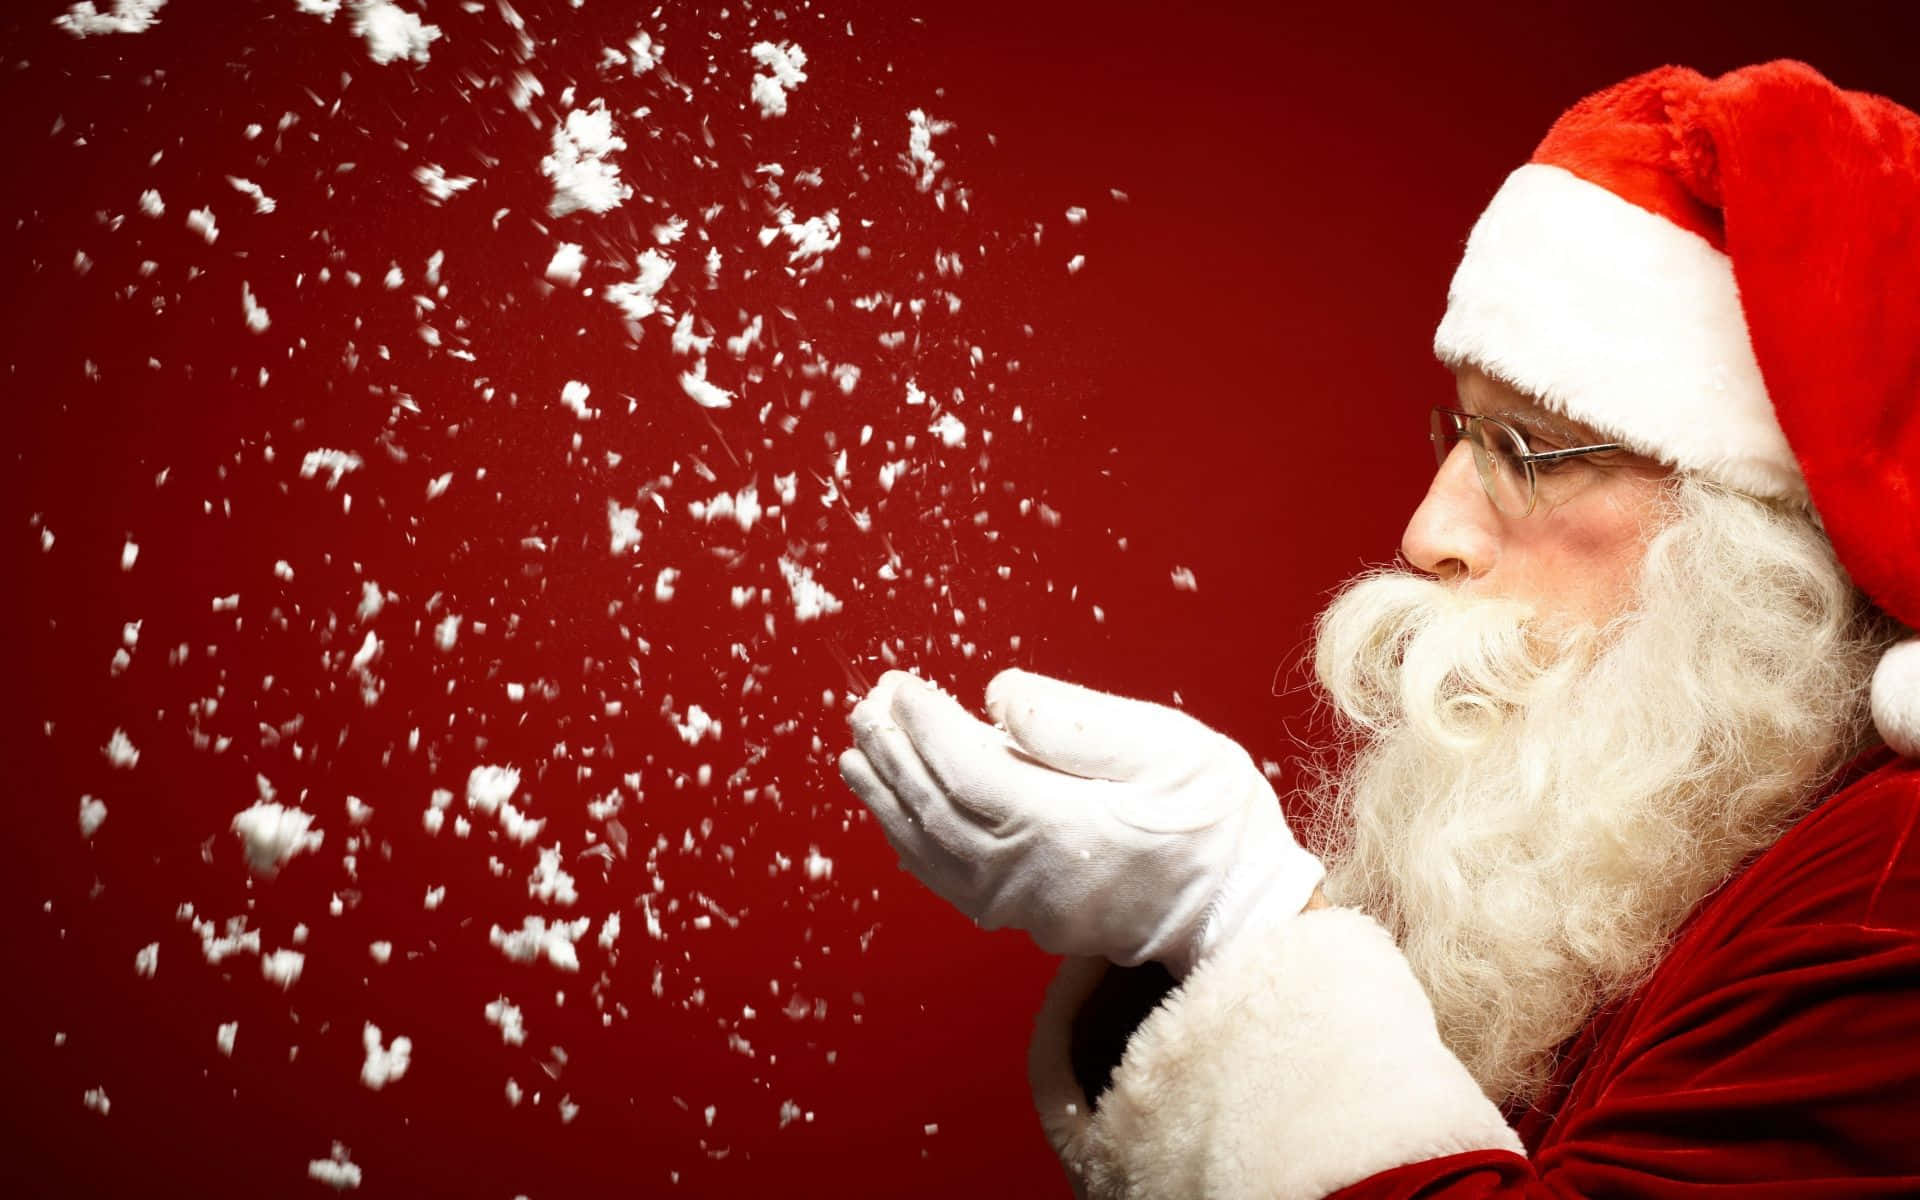 Santa Claus joyfully greeting in his festive red suit